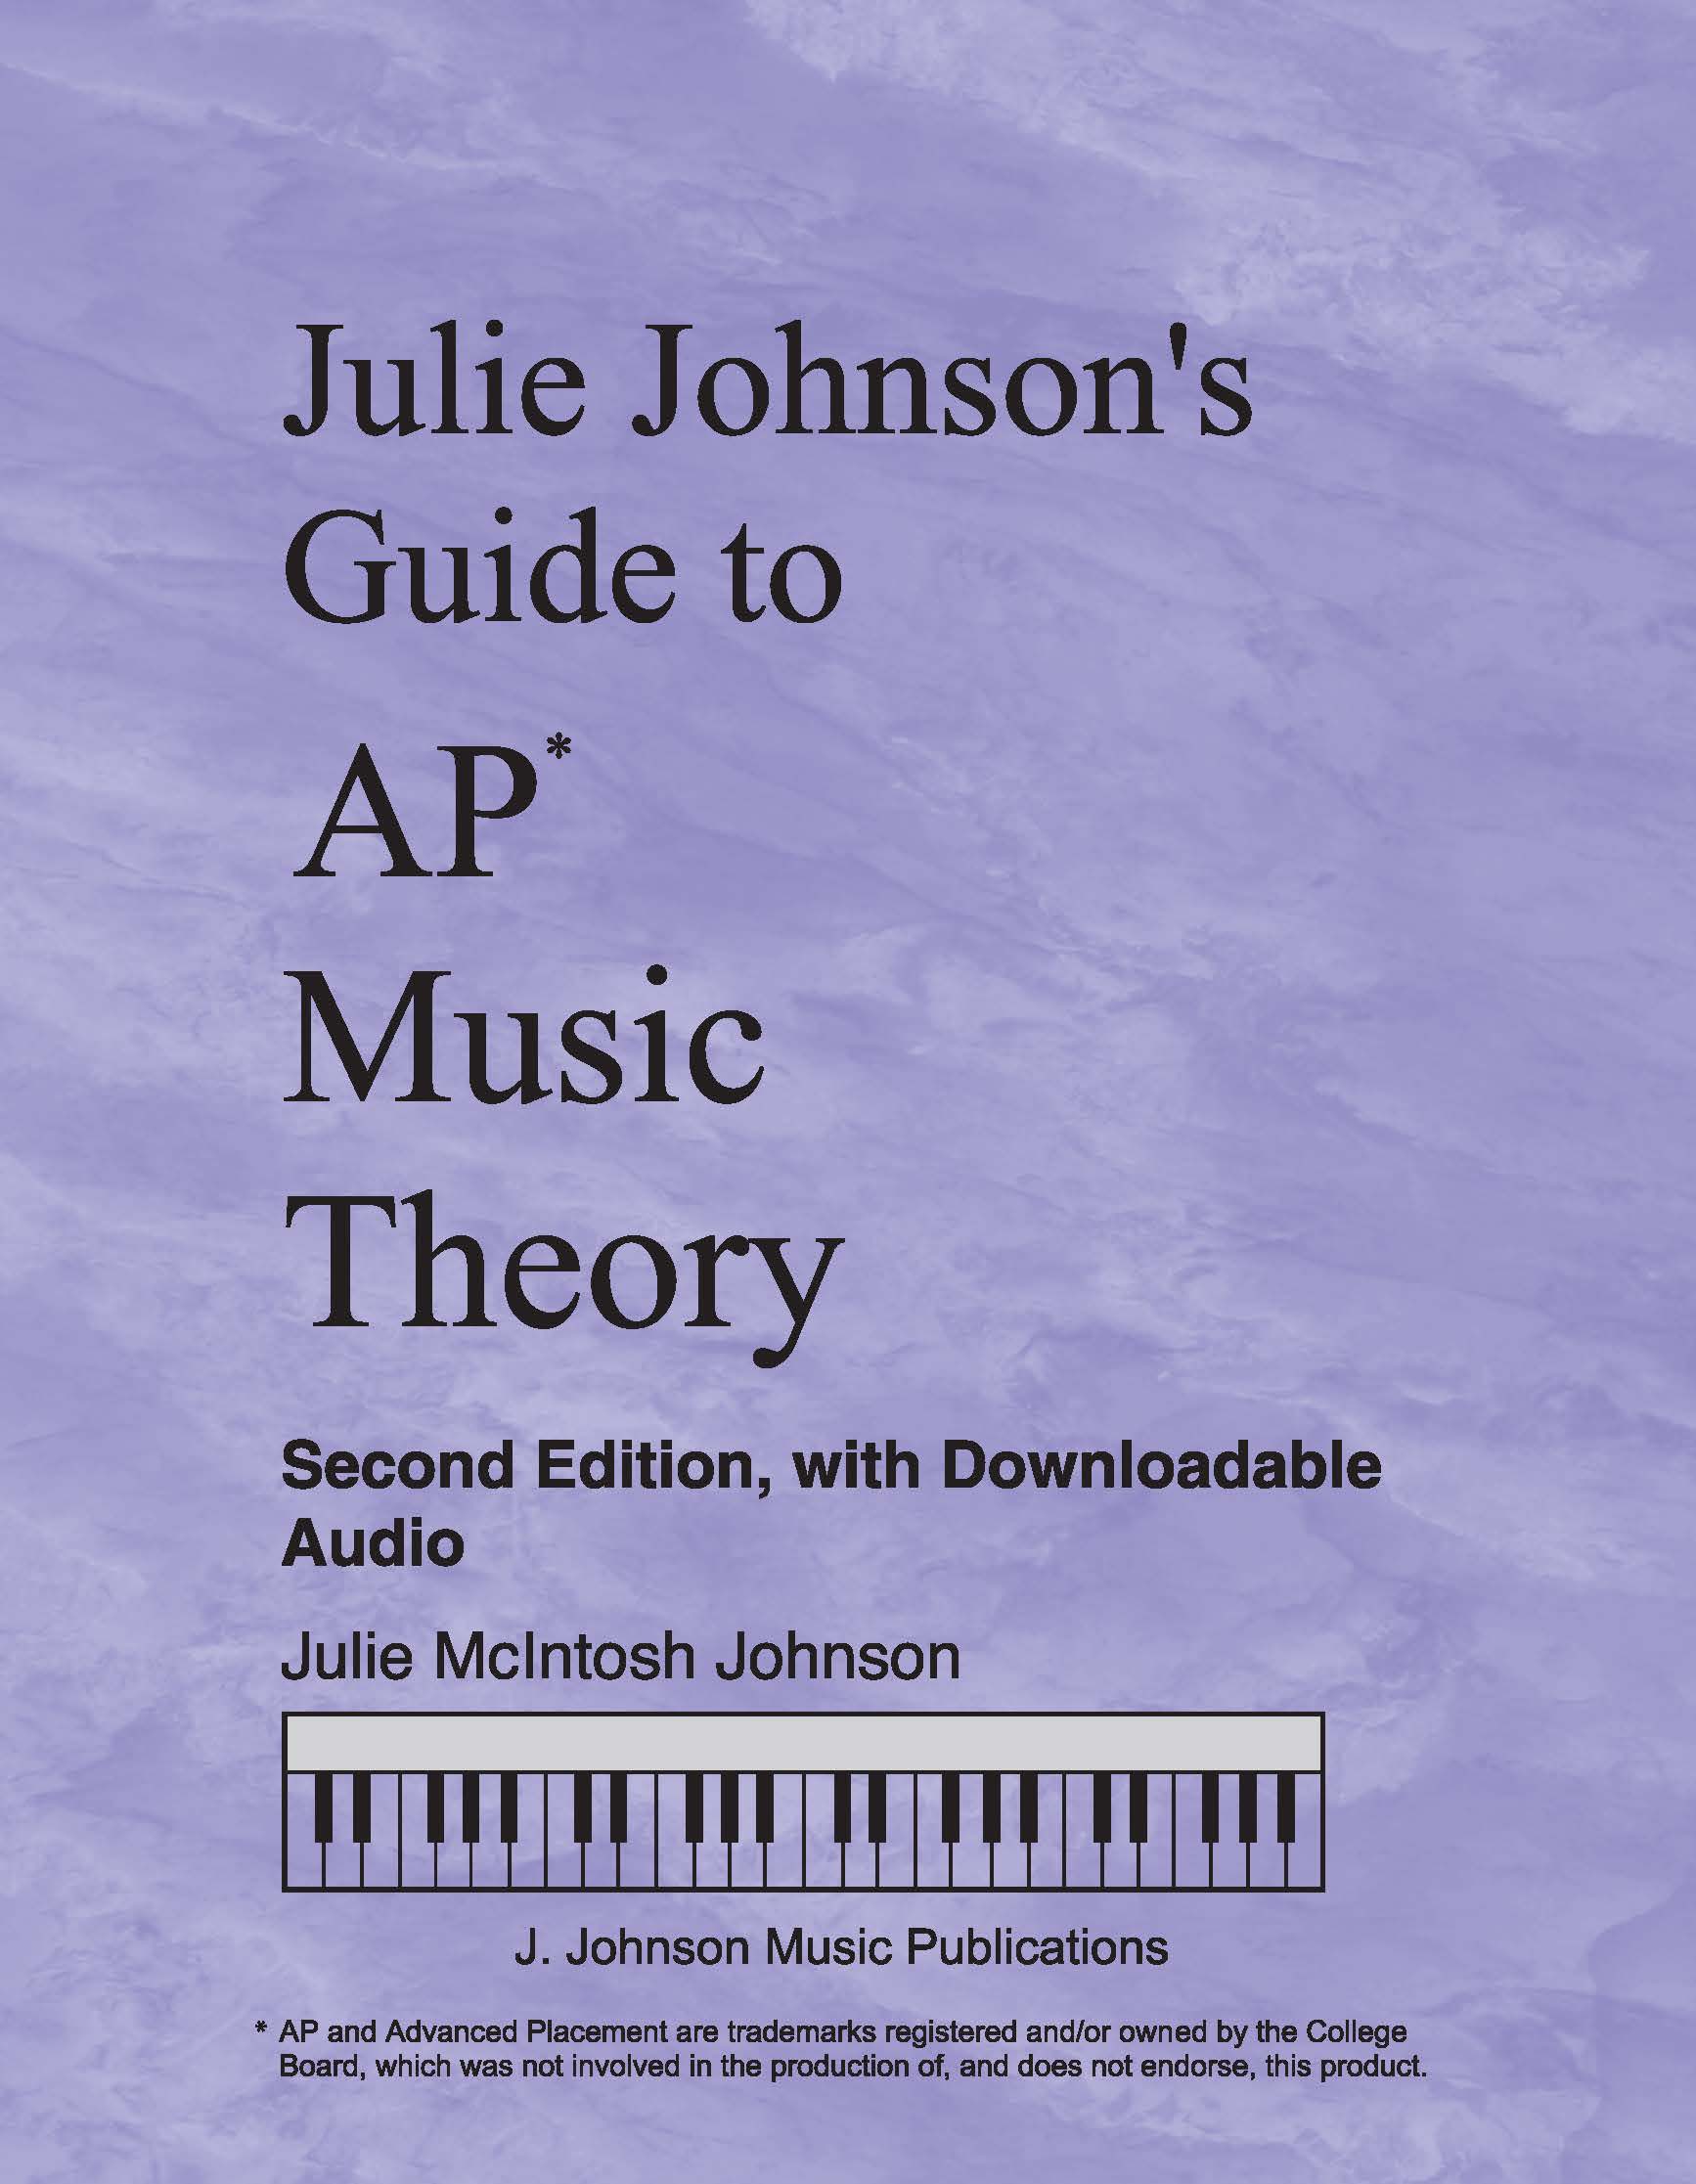 J. Johnson Music Publications